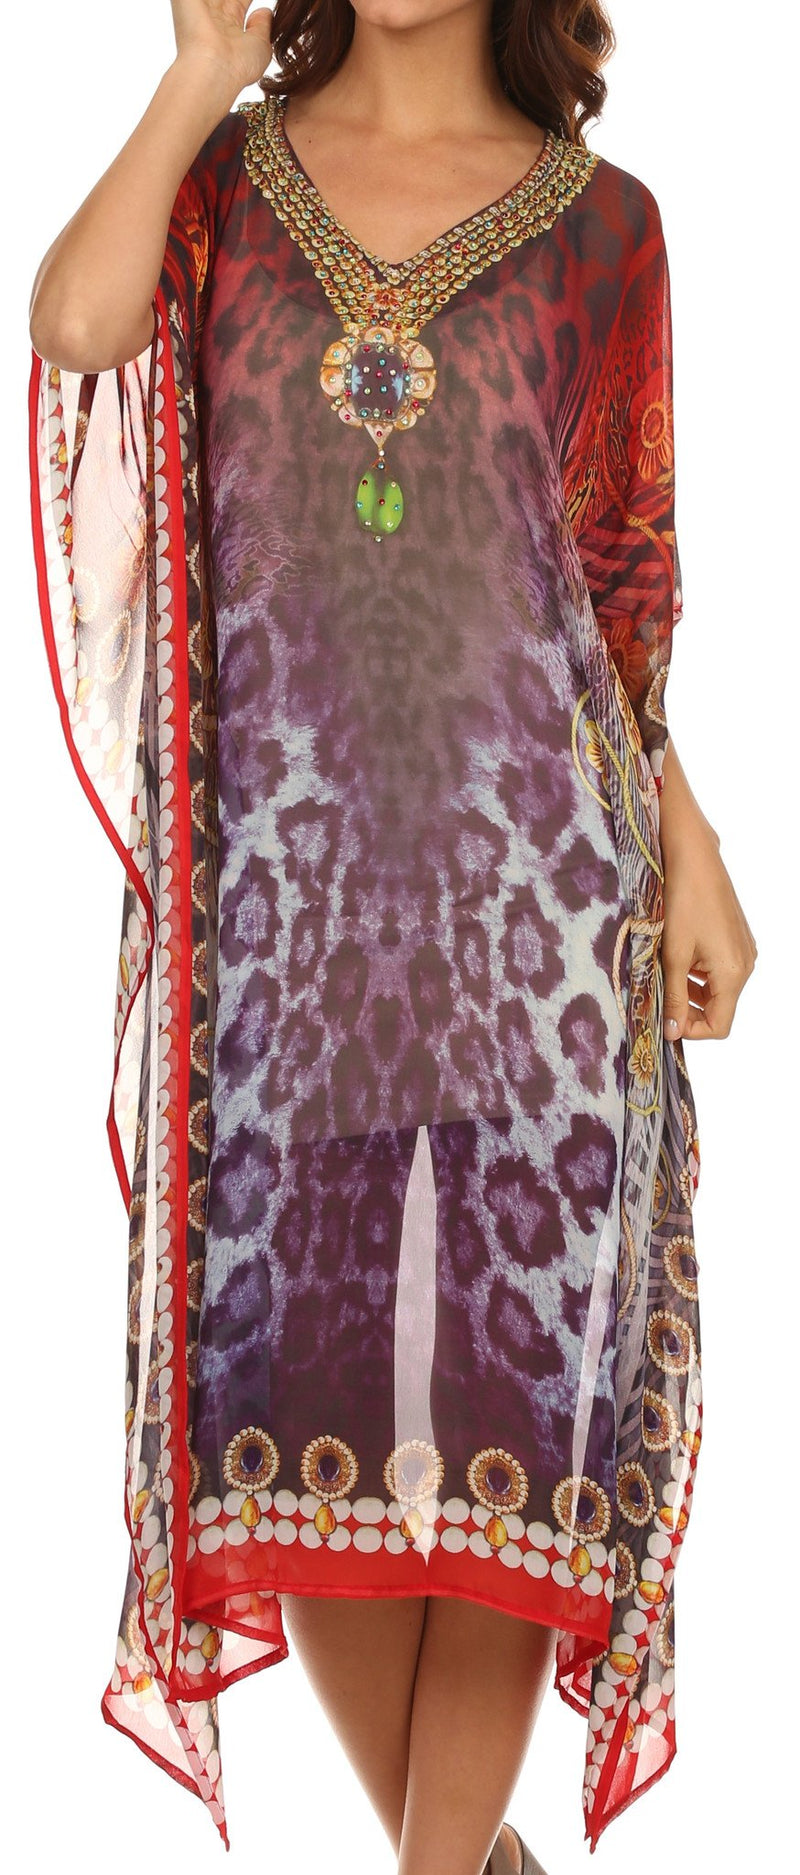 Sakkas Myla Rhinestone Accented Multicolored Sheer Beach Dress / Cover Up